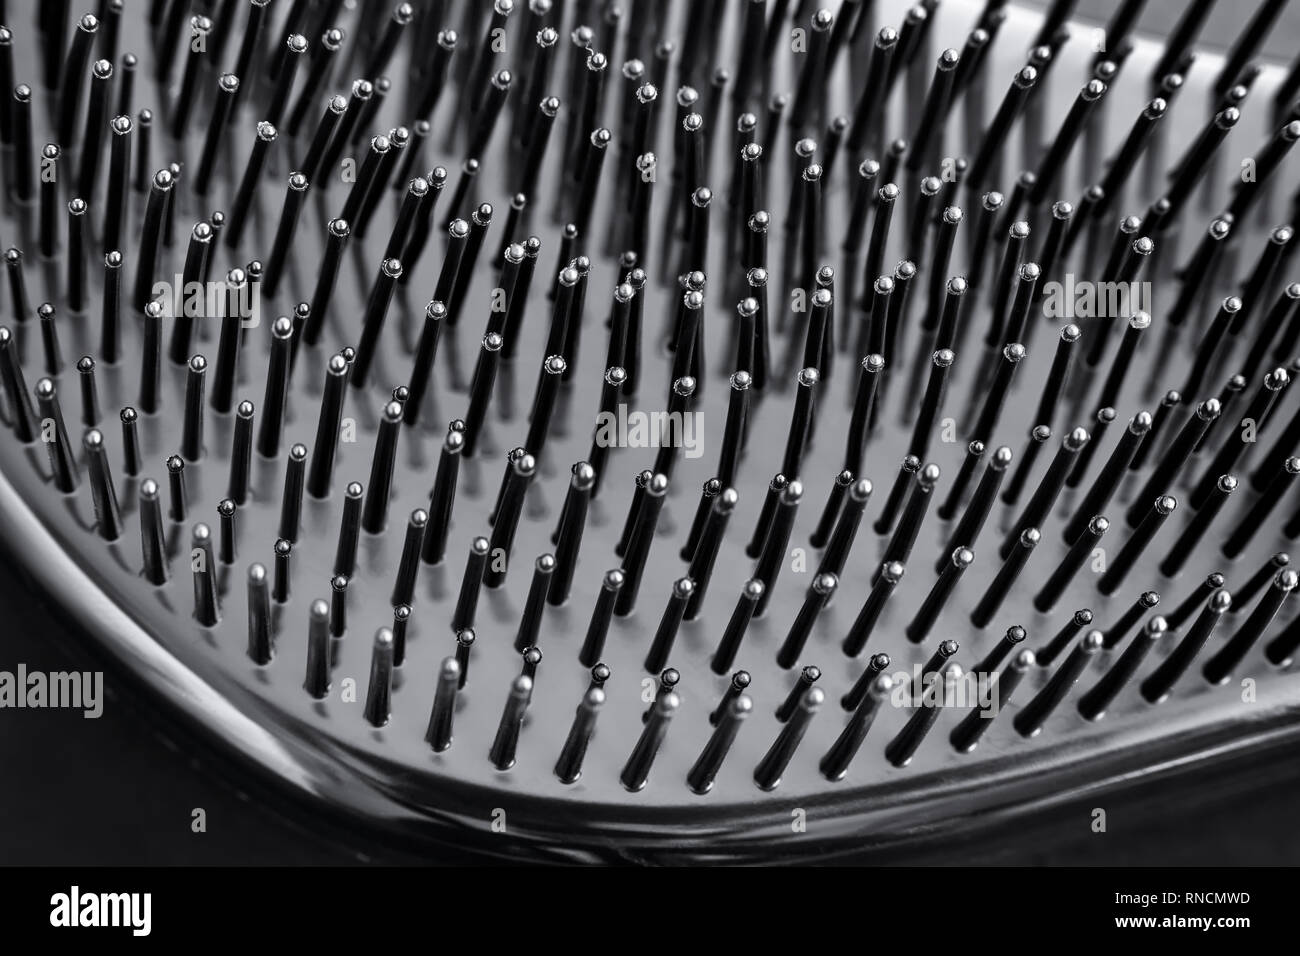 Close-up of bristles on black hairbrush. Black background. Stock Photo